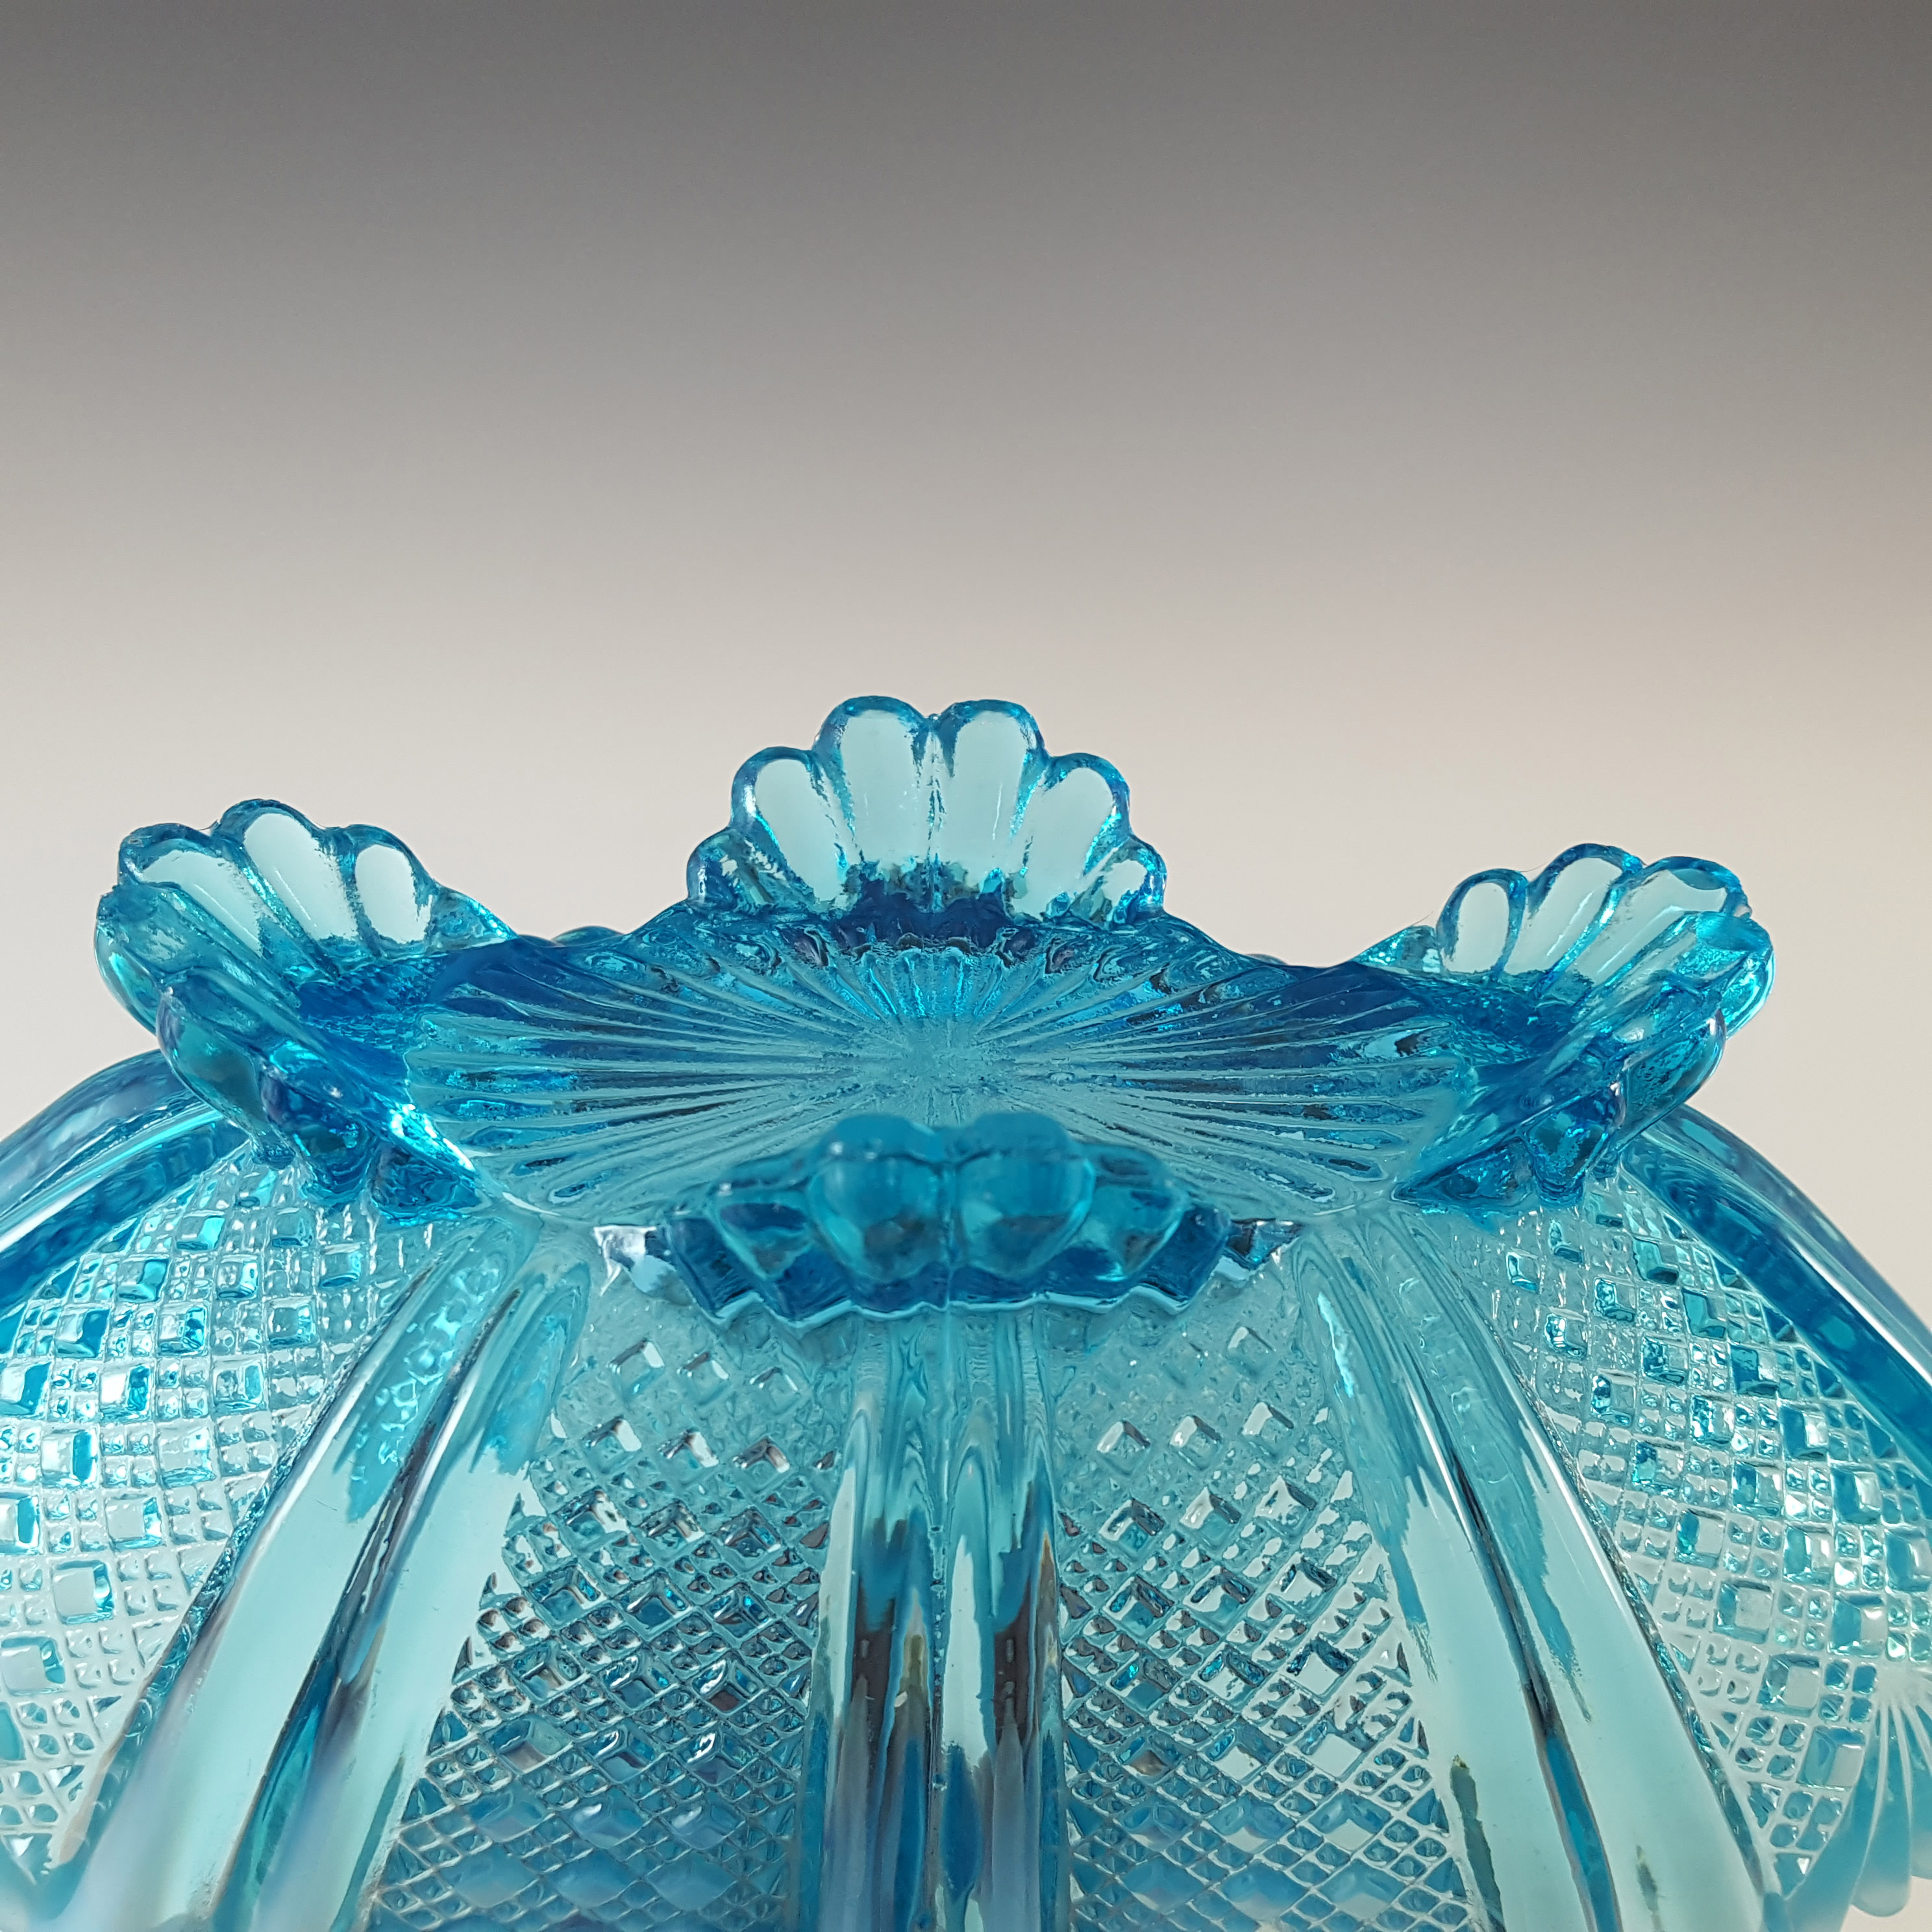 Davidson Blue Pearline Glass 'Richelieu' Basket Bowl - Click Image to Close